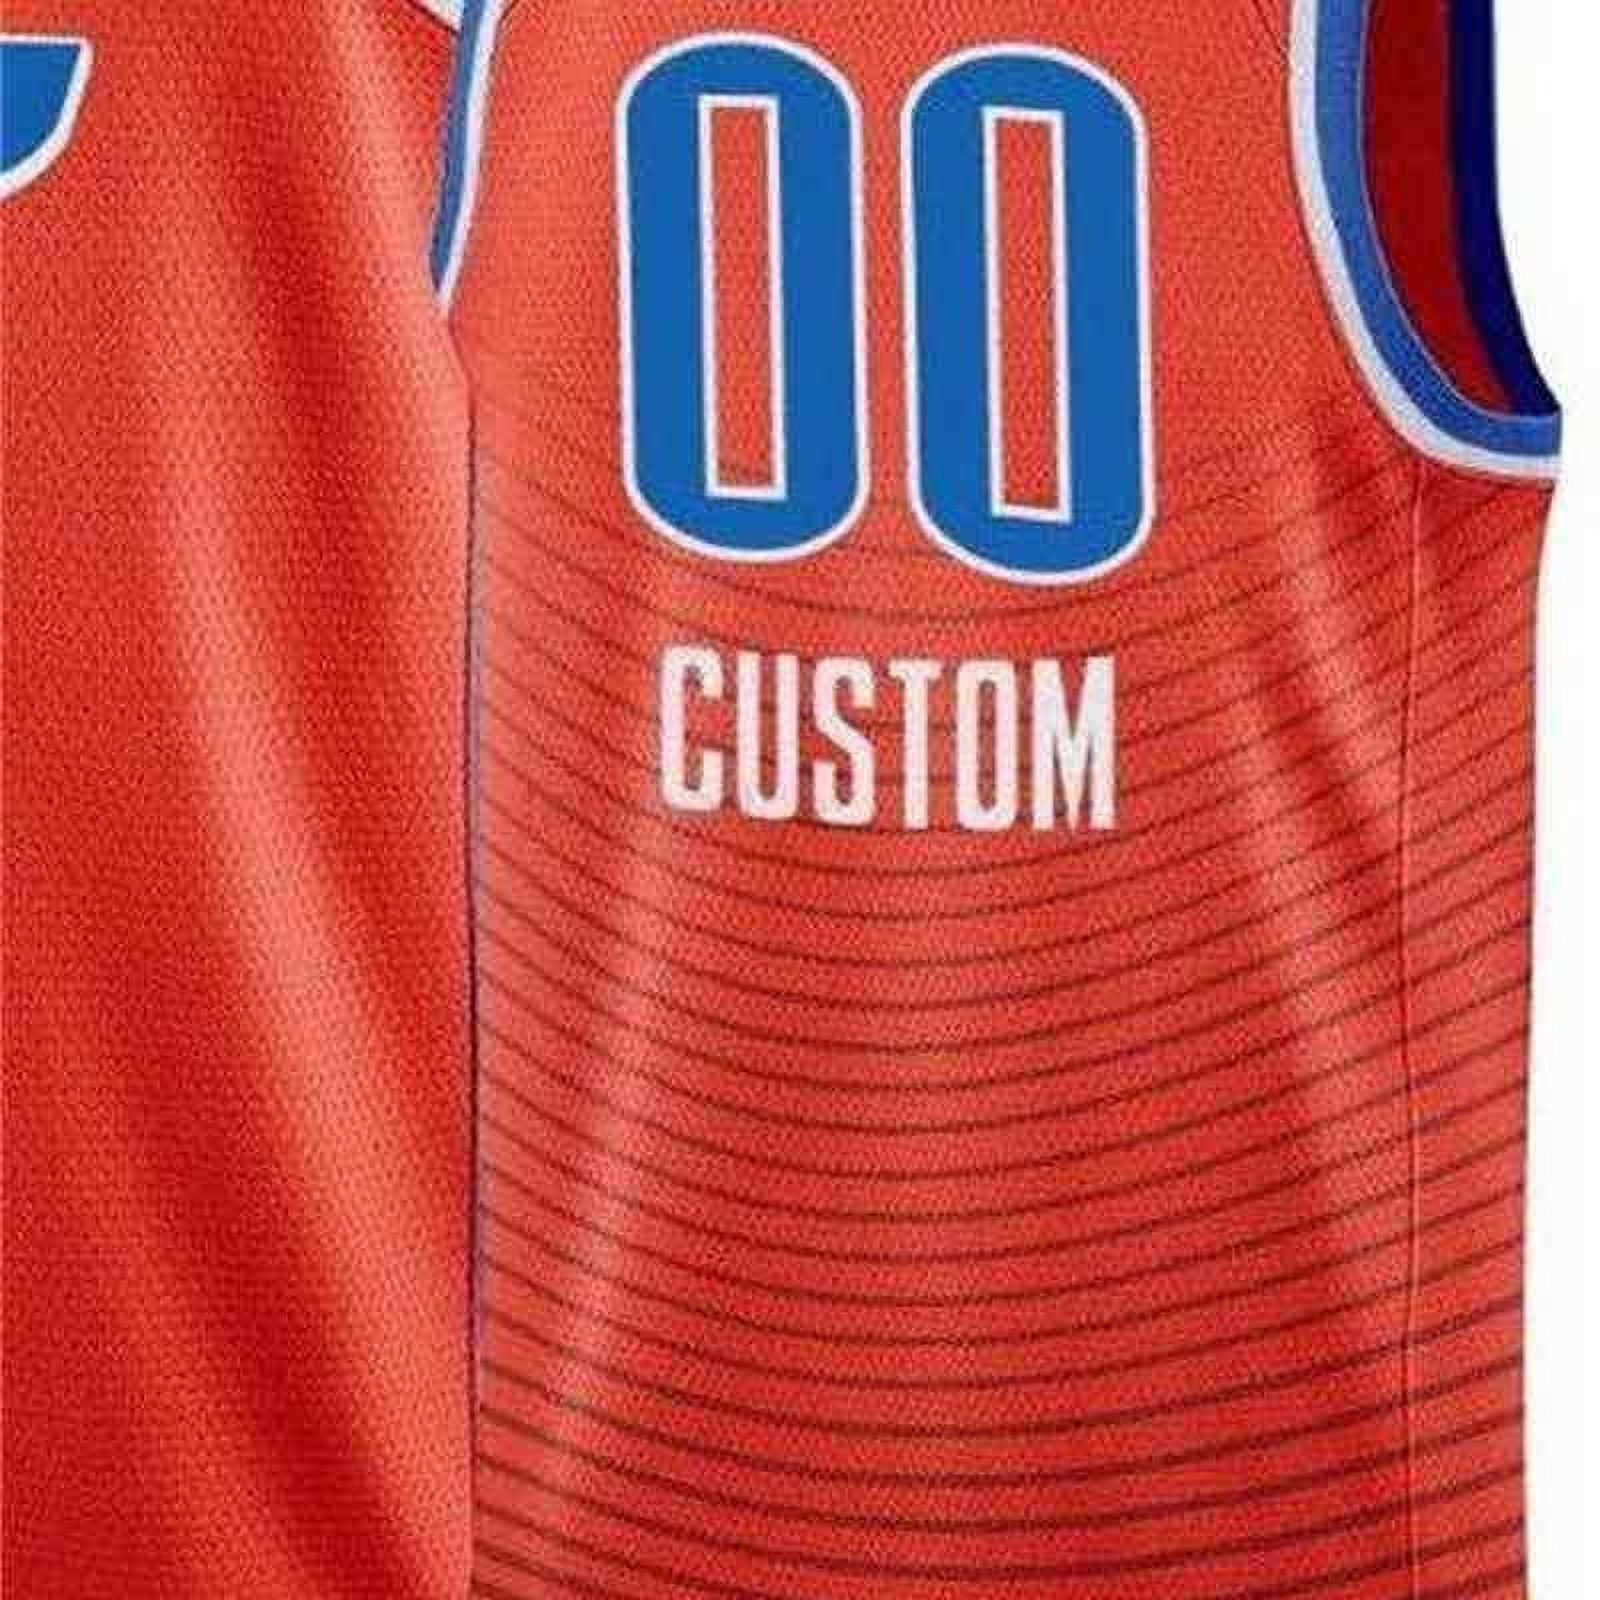 NBA_ Basketball Jerseys 75th 2022 Custom Printed Oklahoma's City's